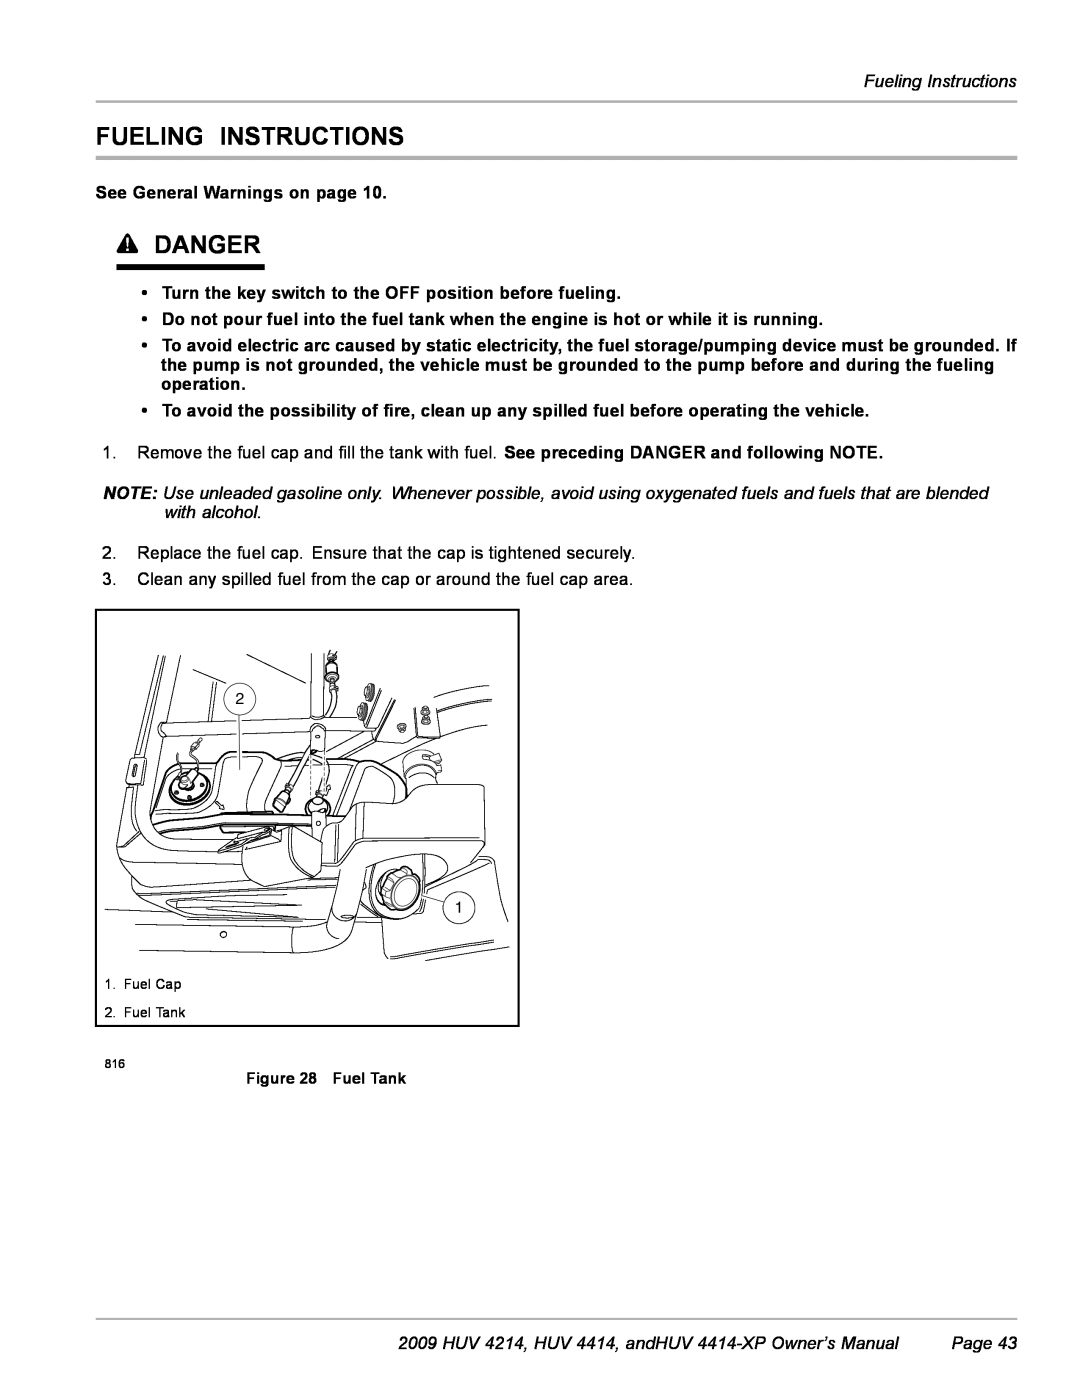 Husqvarna owner manual Fueling Instructions, Danger, HUV 4214, HUV 4414, andHUV 4414-XP Owner’s Manual, Page 